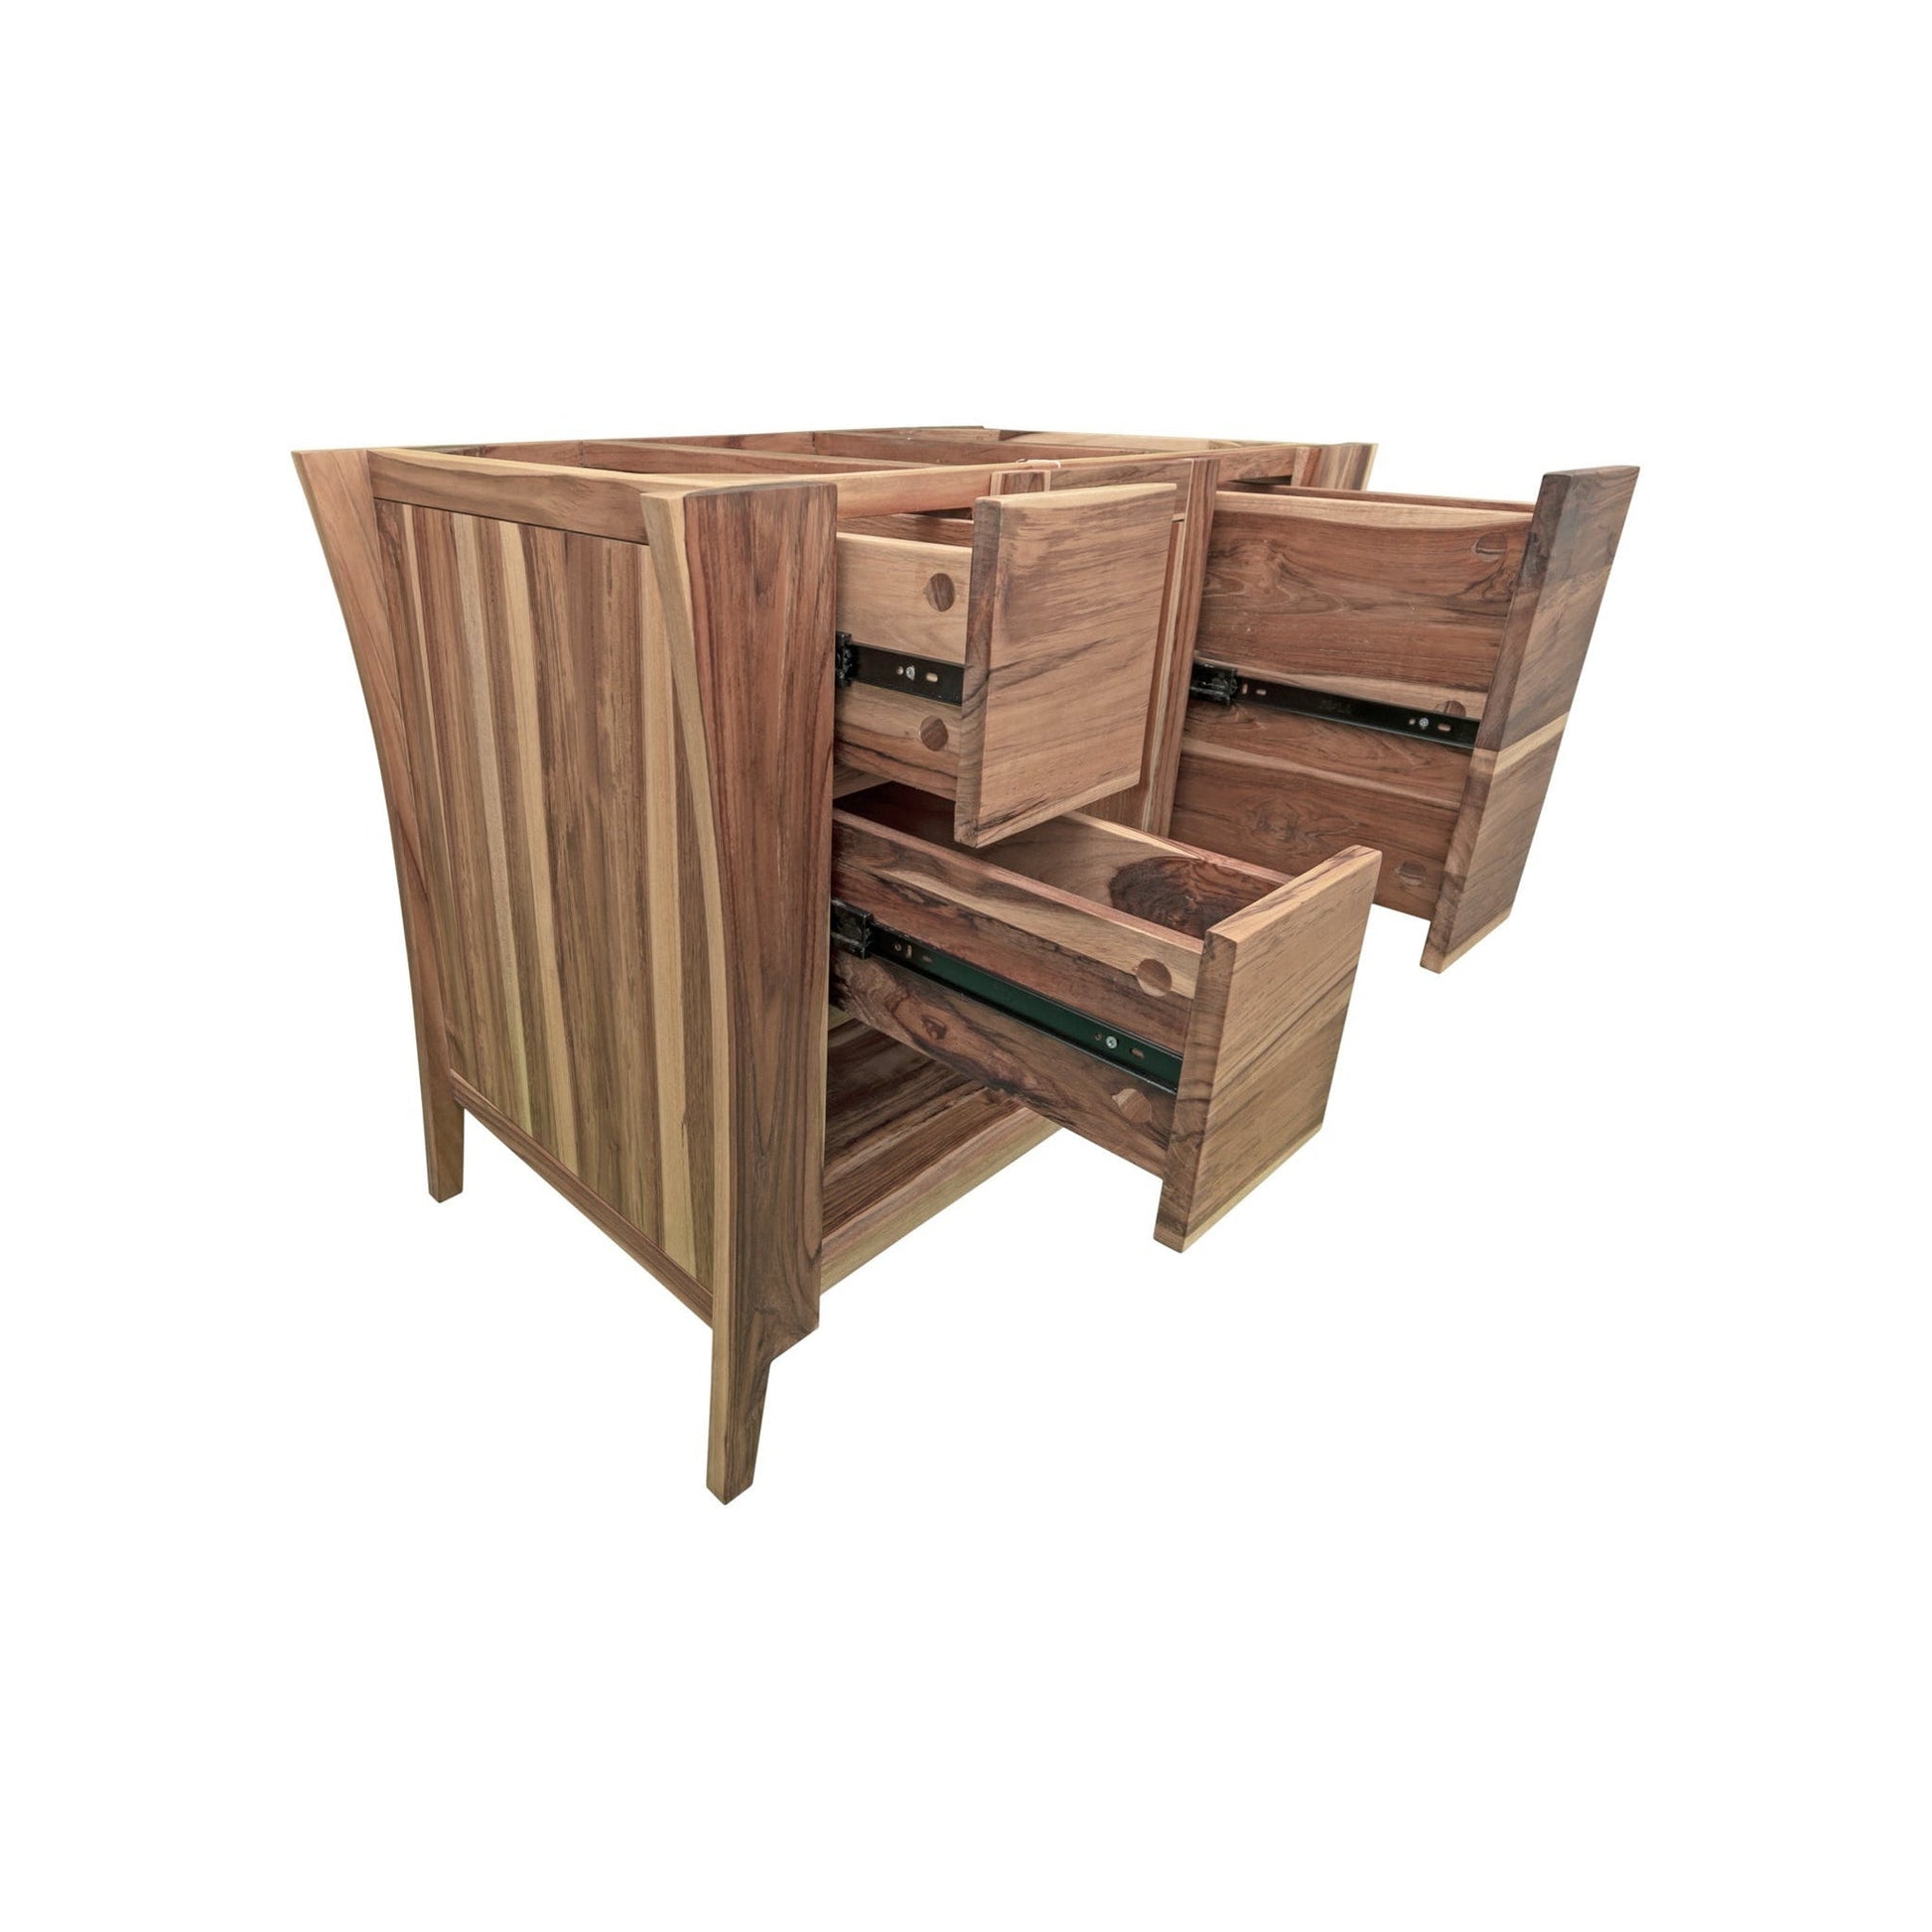 EcoDecors Curvature 36" EarthyTeak Solid Teak Wood Fully Assembled Freestanding Vanity Base For Vessel Sink